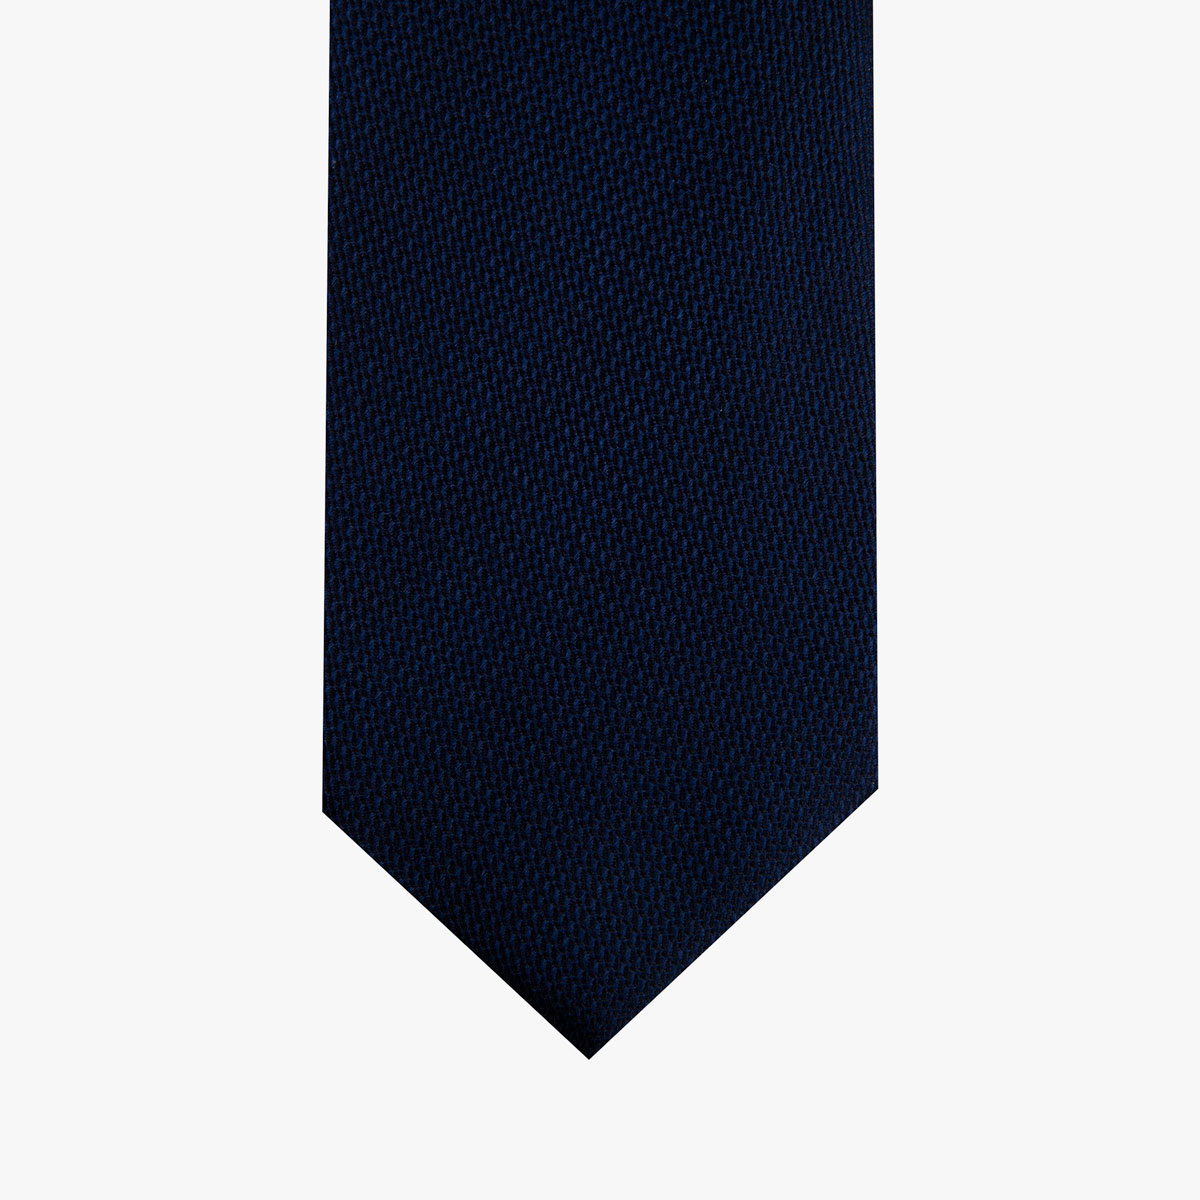 Krawatte glatt mit Struktur in blau